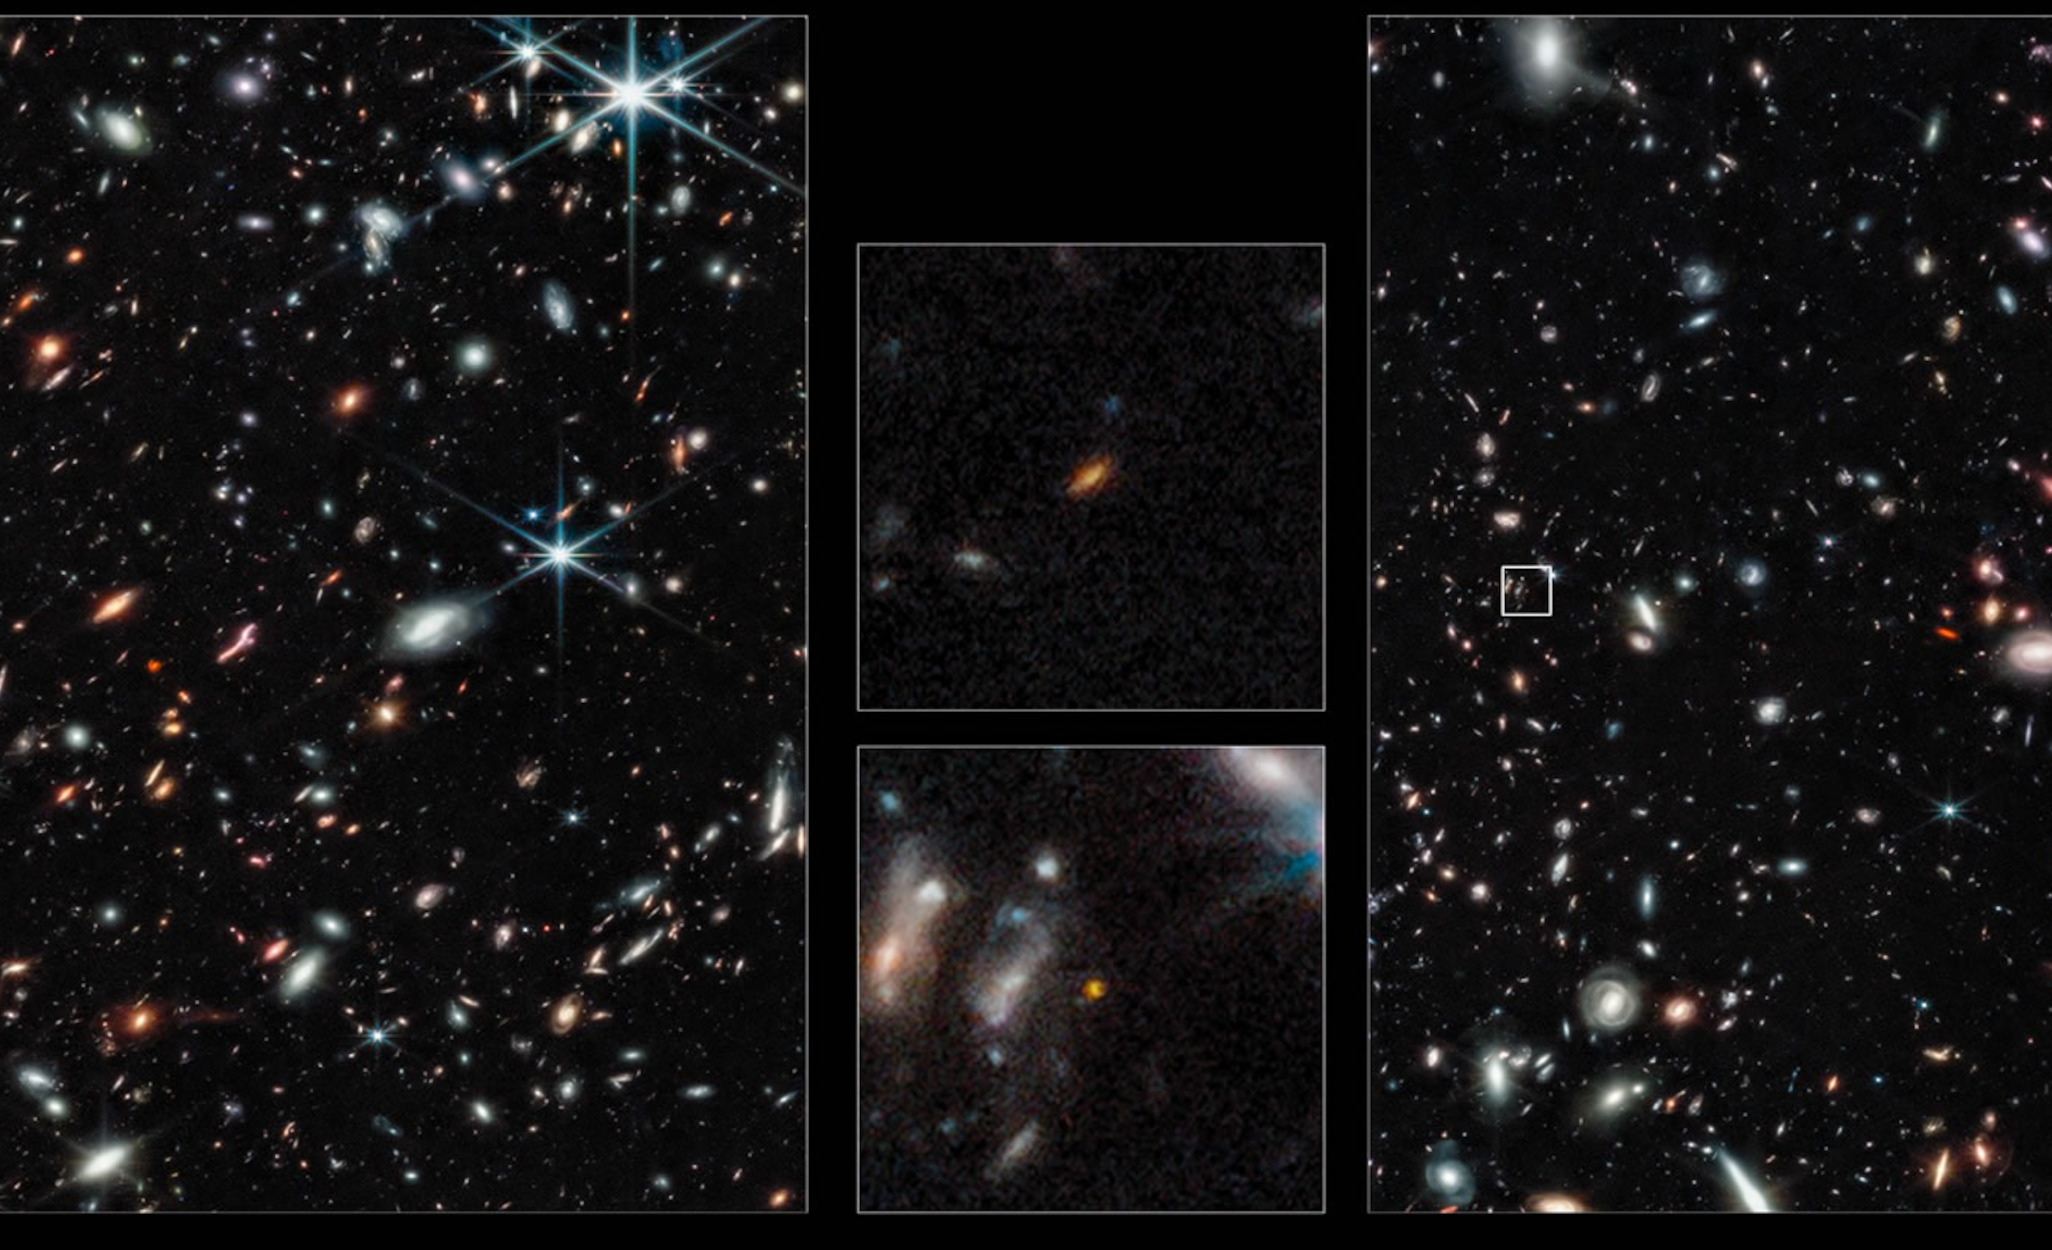 James Webb: Νέα σπουδαία ανακάλυψη – Βρέθηκαν δύο από τους πιο μακρινούς και απρόσμενα φωτεινούς γαλαξίες